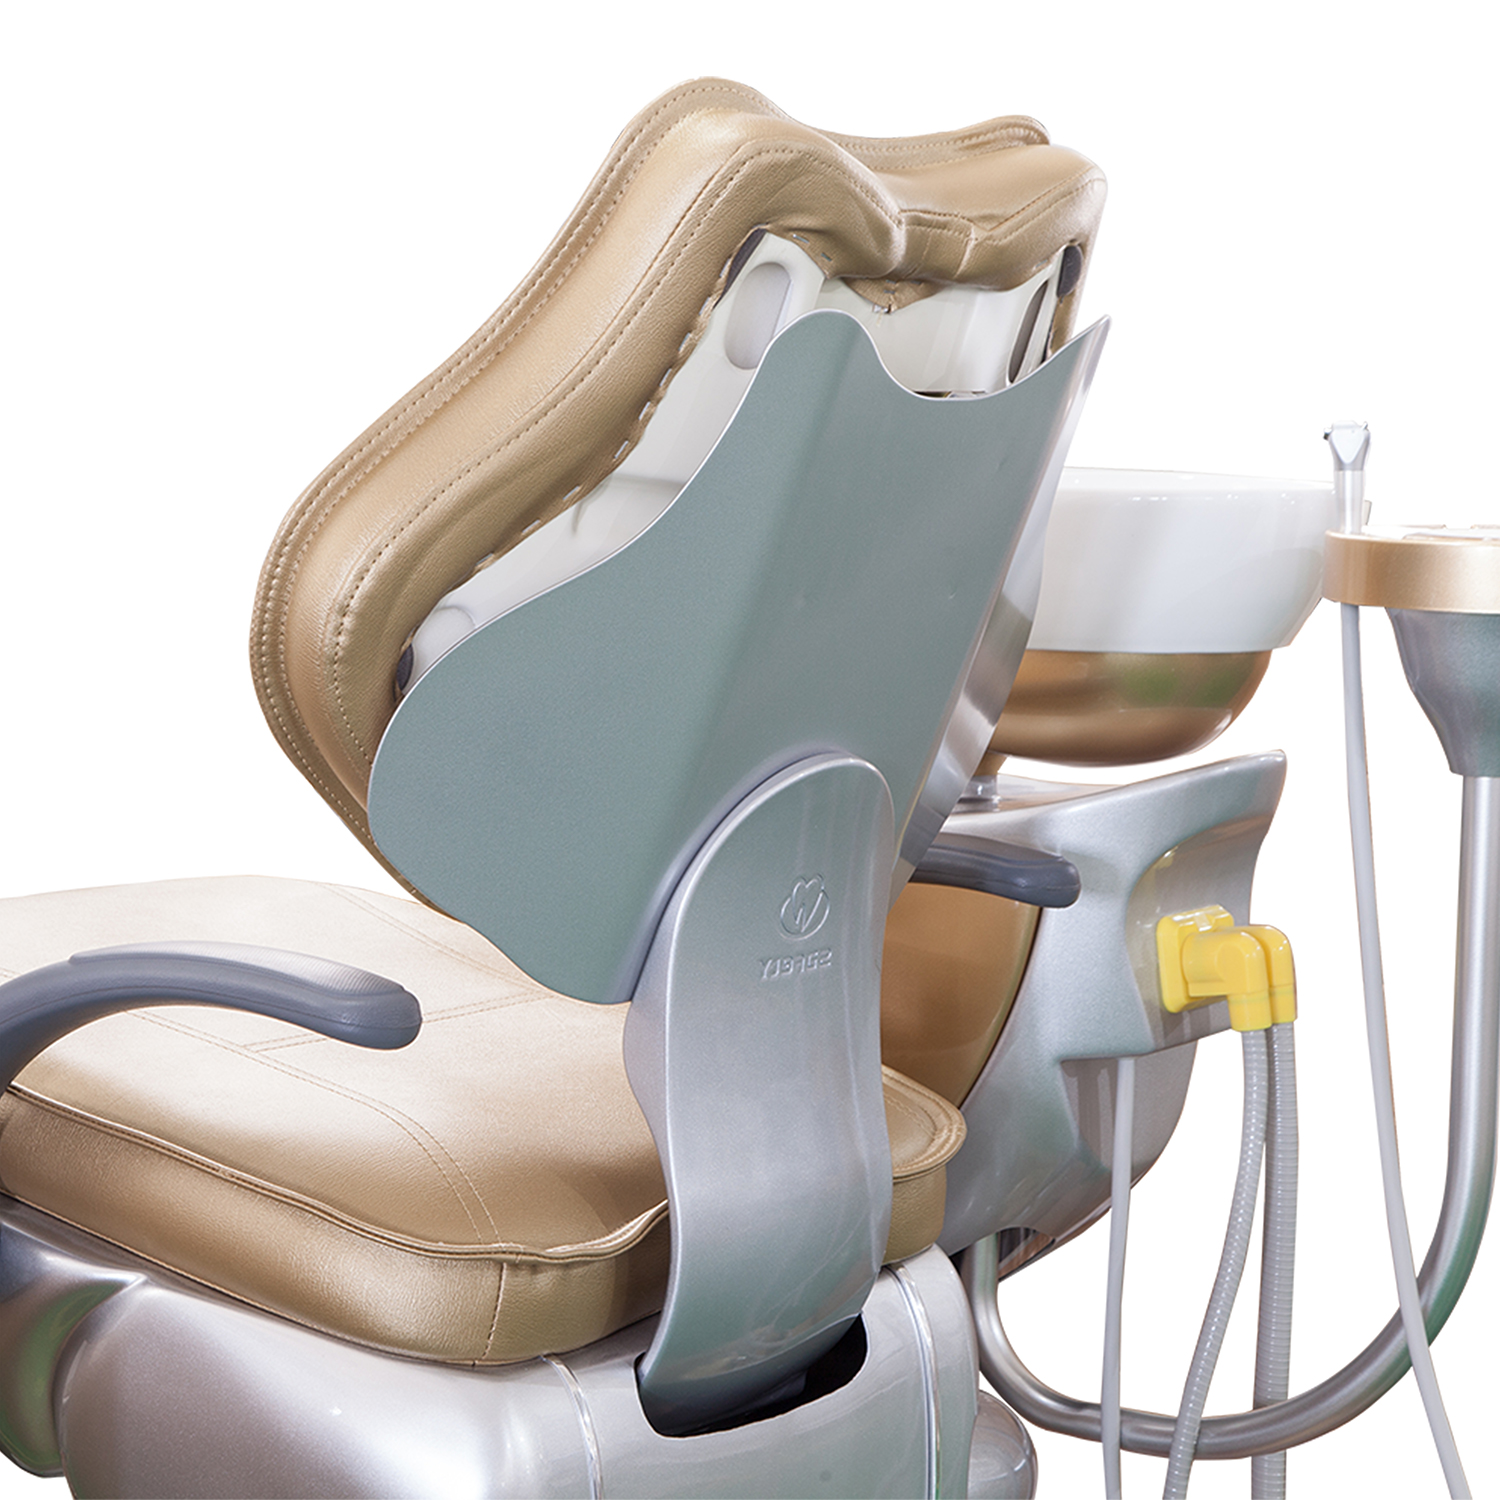 Dental Unit Chair Price